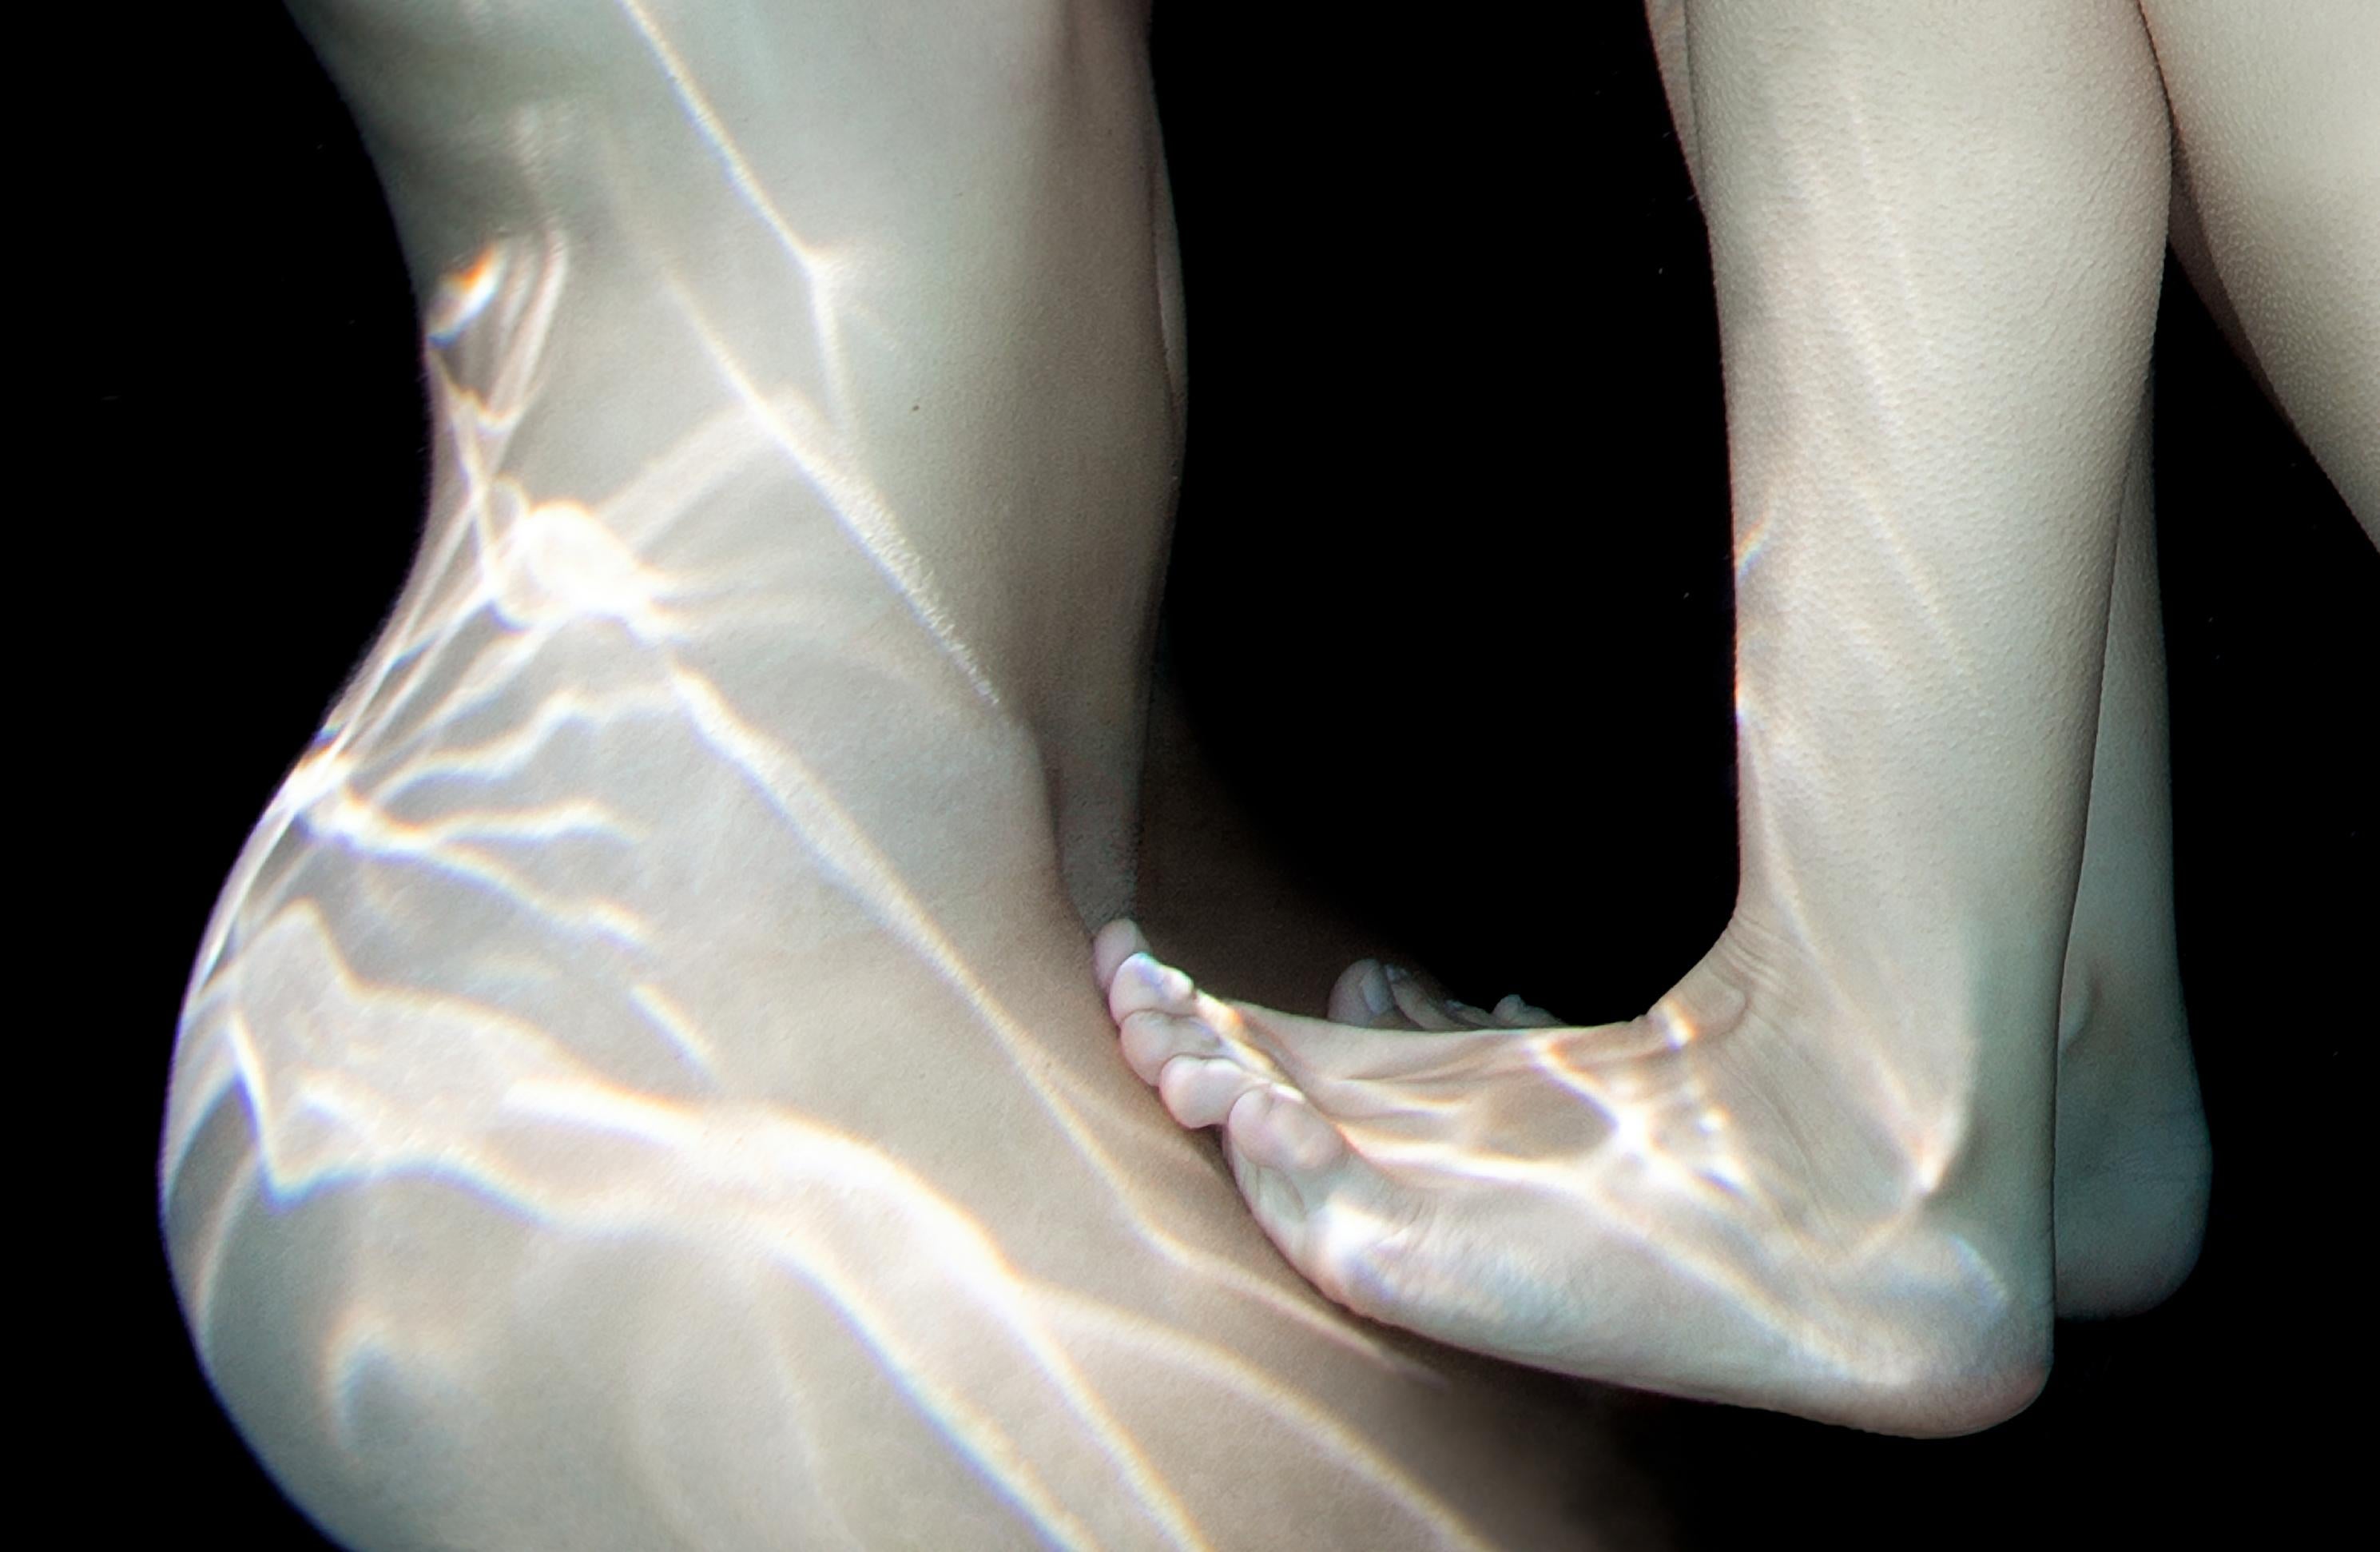 Porcelain  - underwater nude photograph - archival pigment print 35